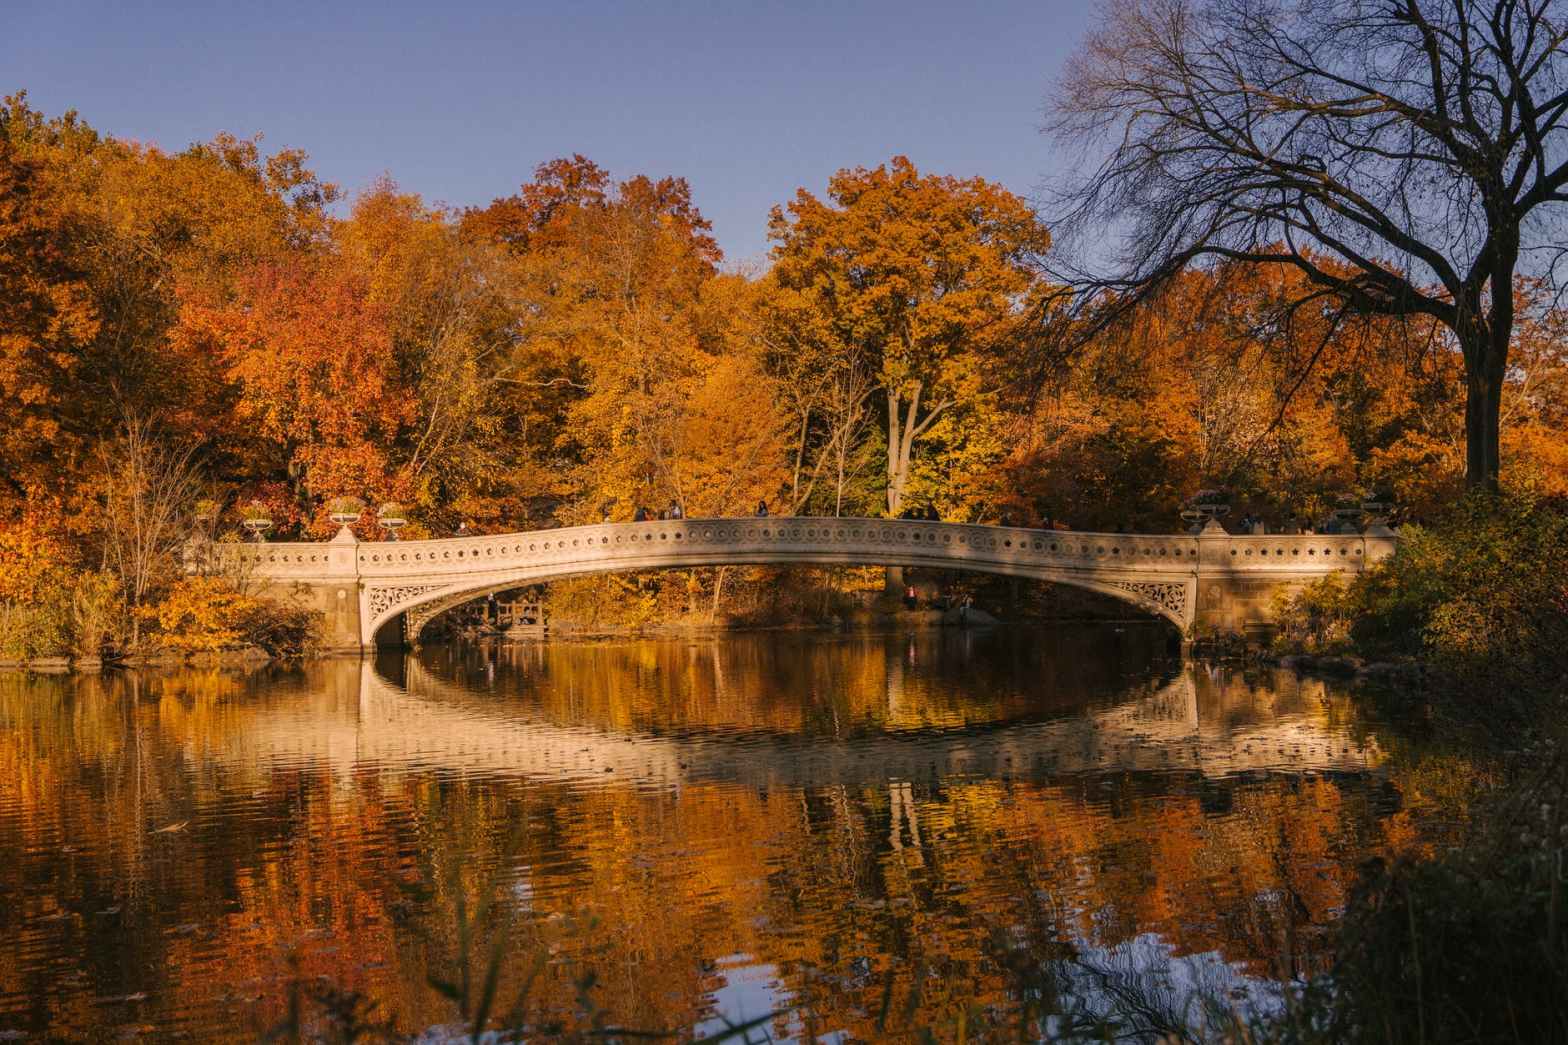 bow bridge over calm lake placed in autumn park